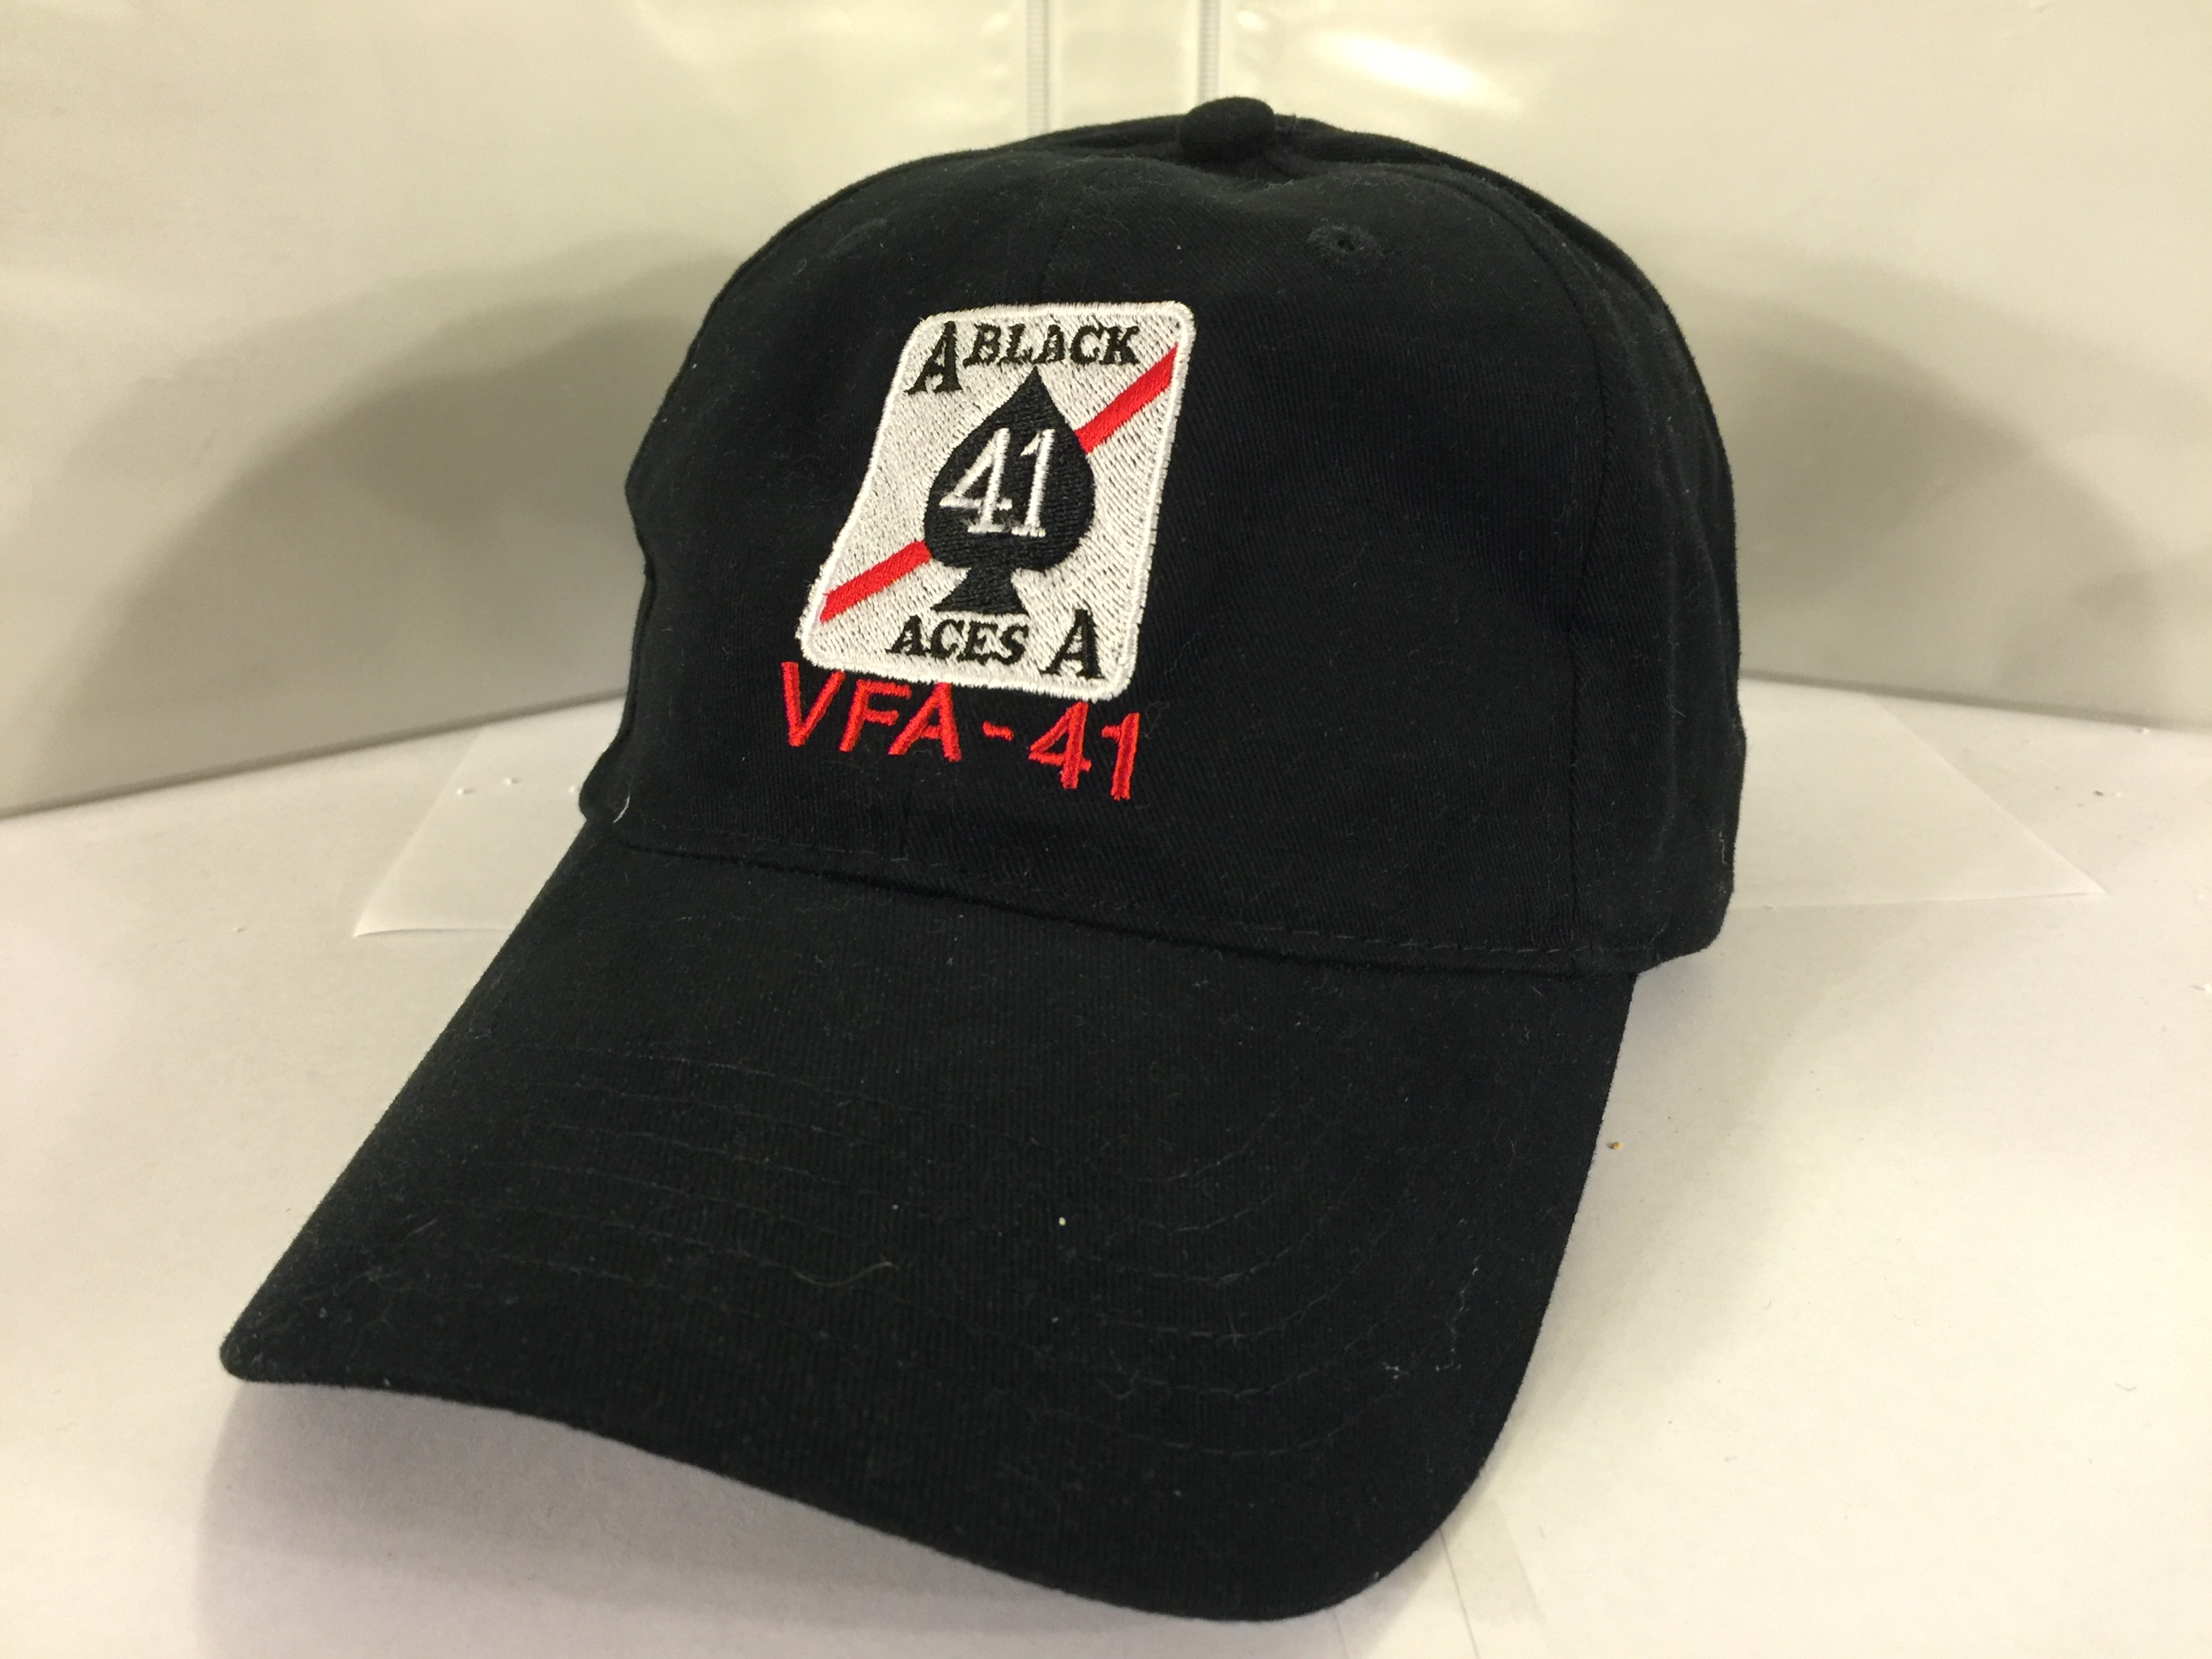 VFA-41 'Sqdn Logo' Ballcap (Black/Dir. Emb.)